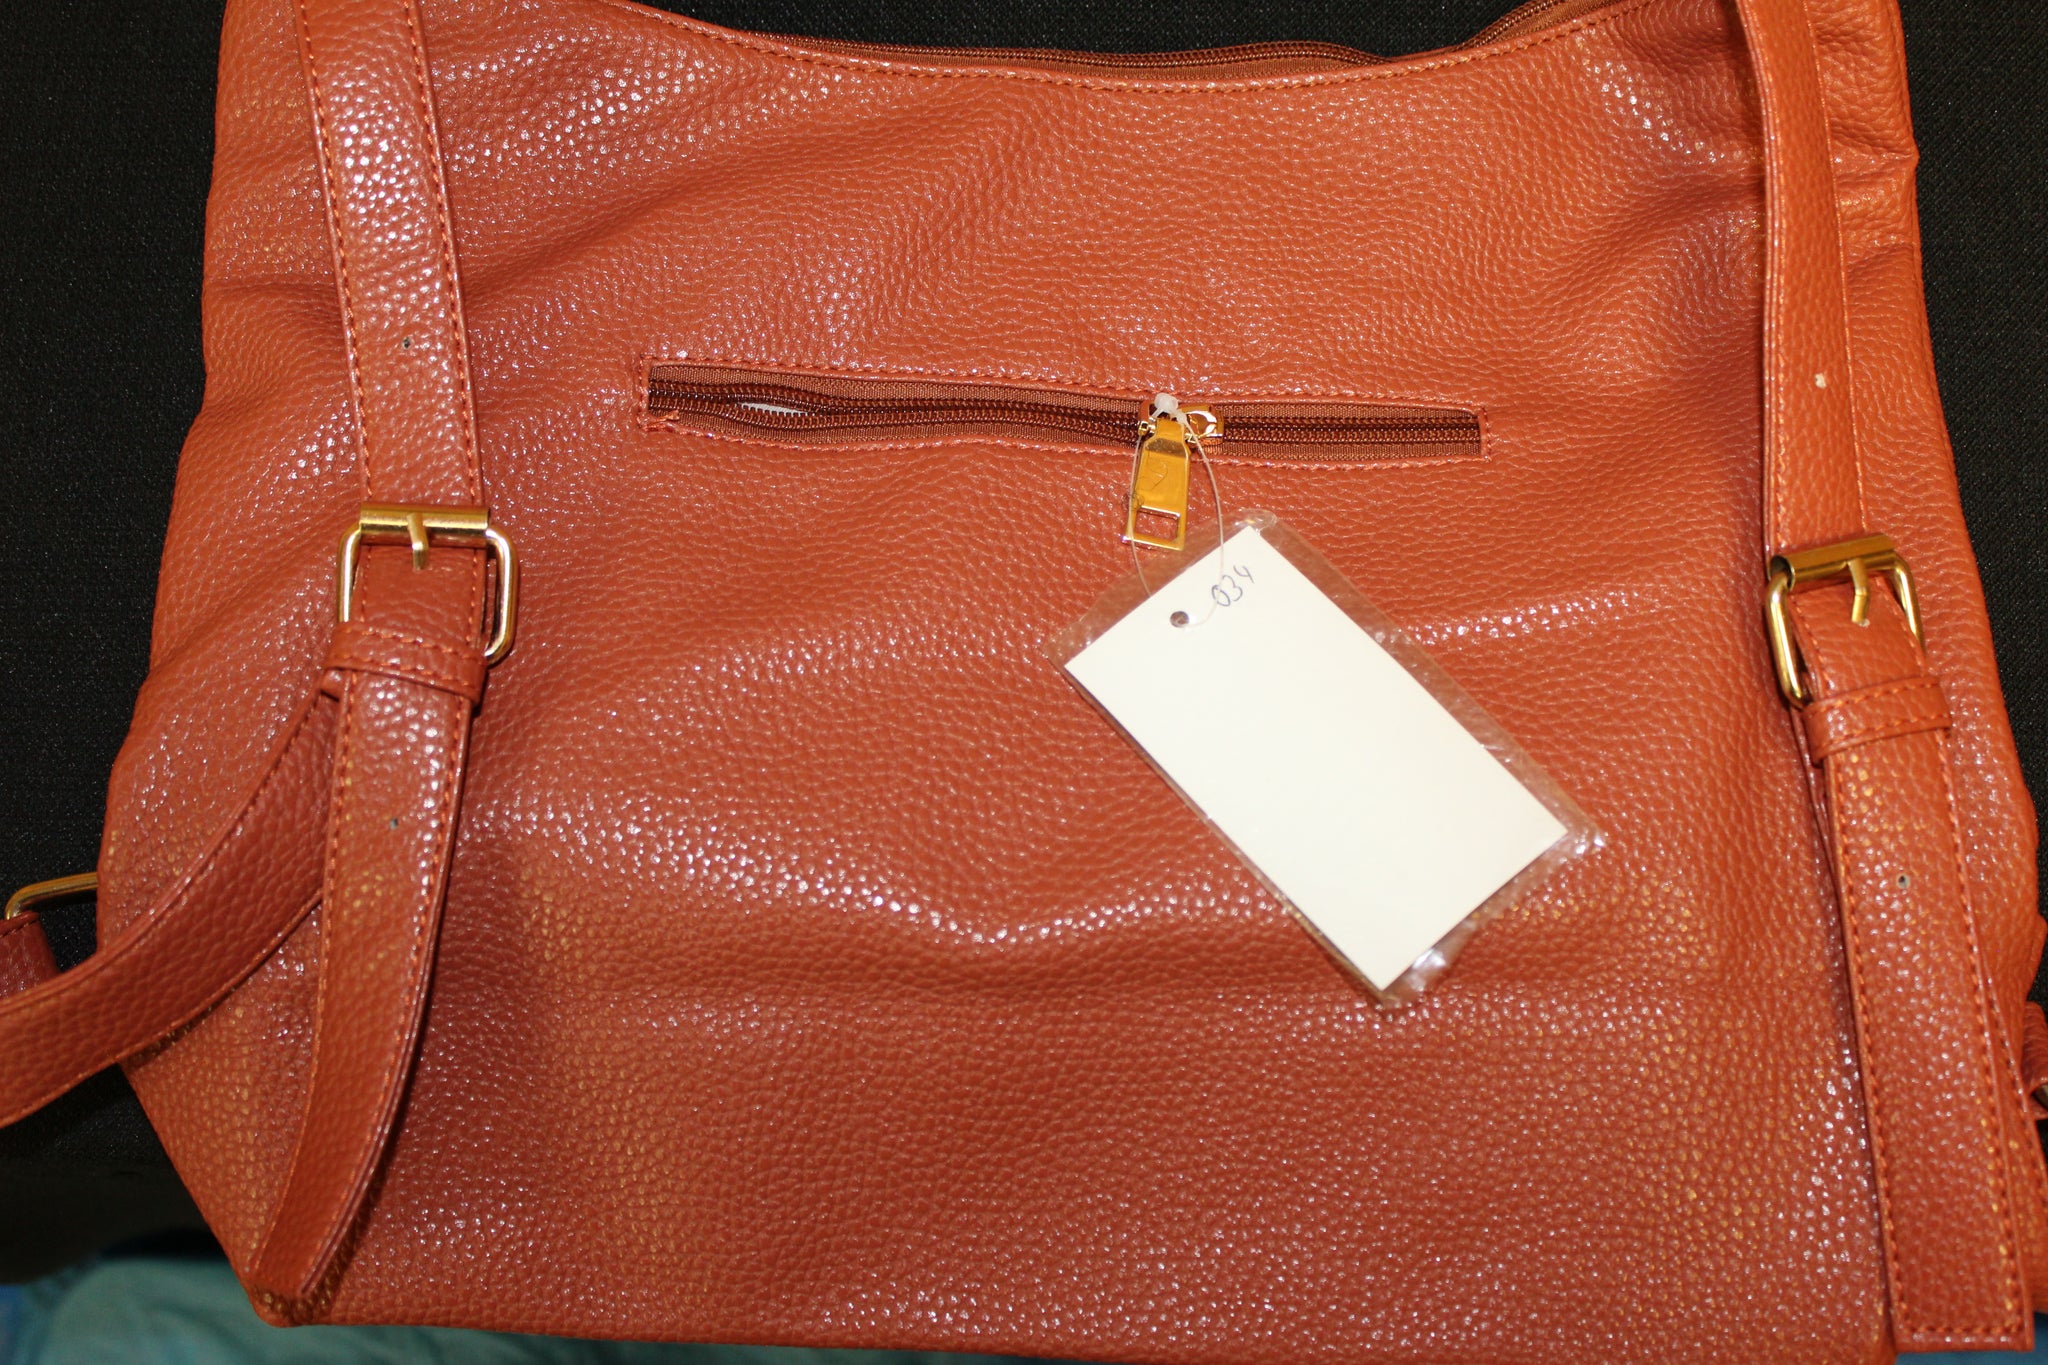 Buy Convertible Backpack Purse For Women Handbag Hobo Tote Satchel Shoulder  Bag - Dark Purple at Amazon.in